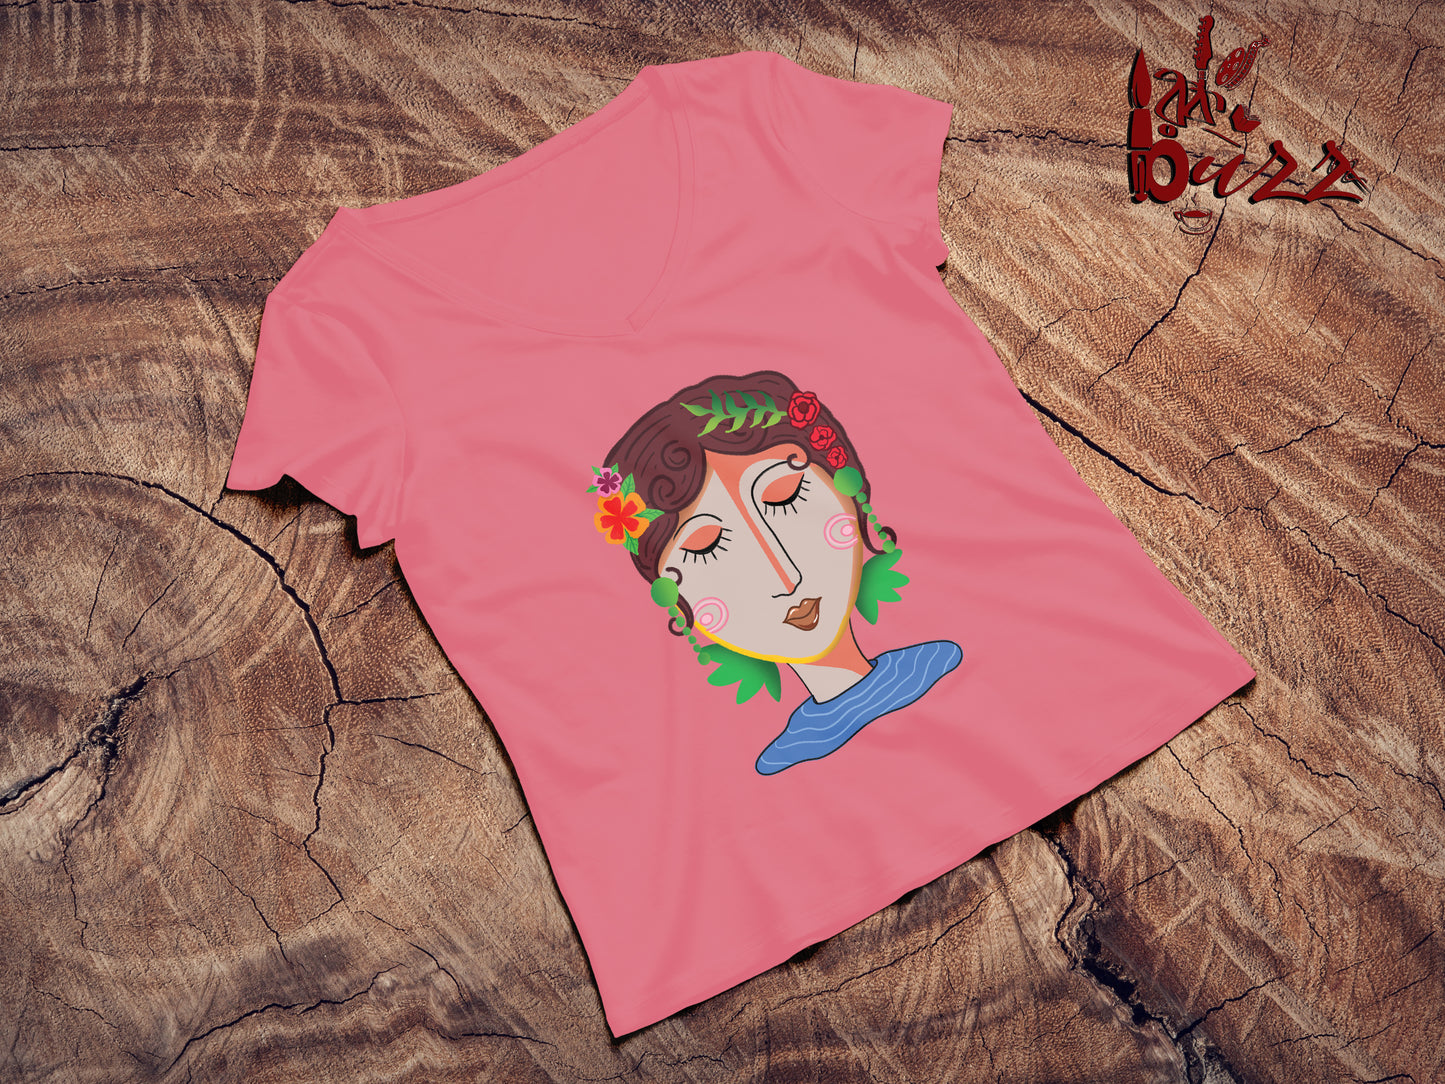 Abstract designed Girl printed tshirt